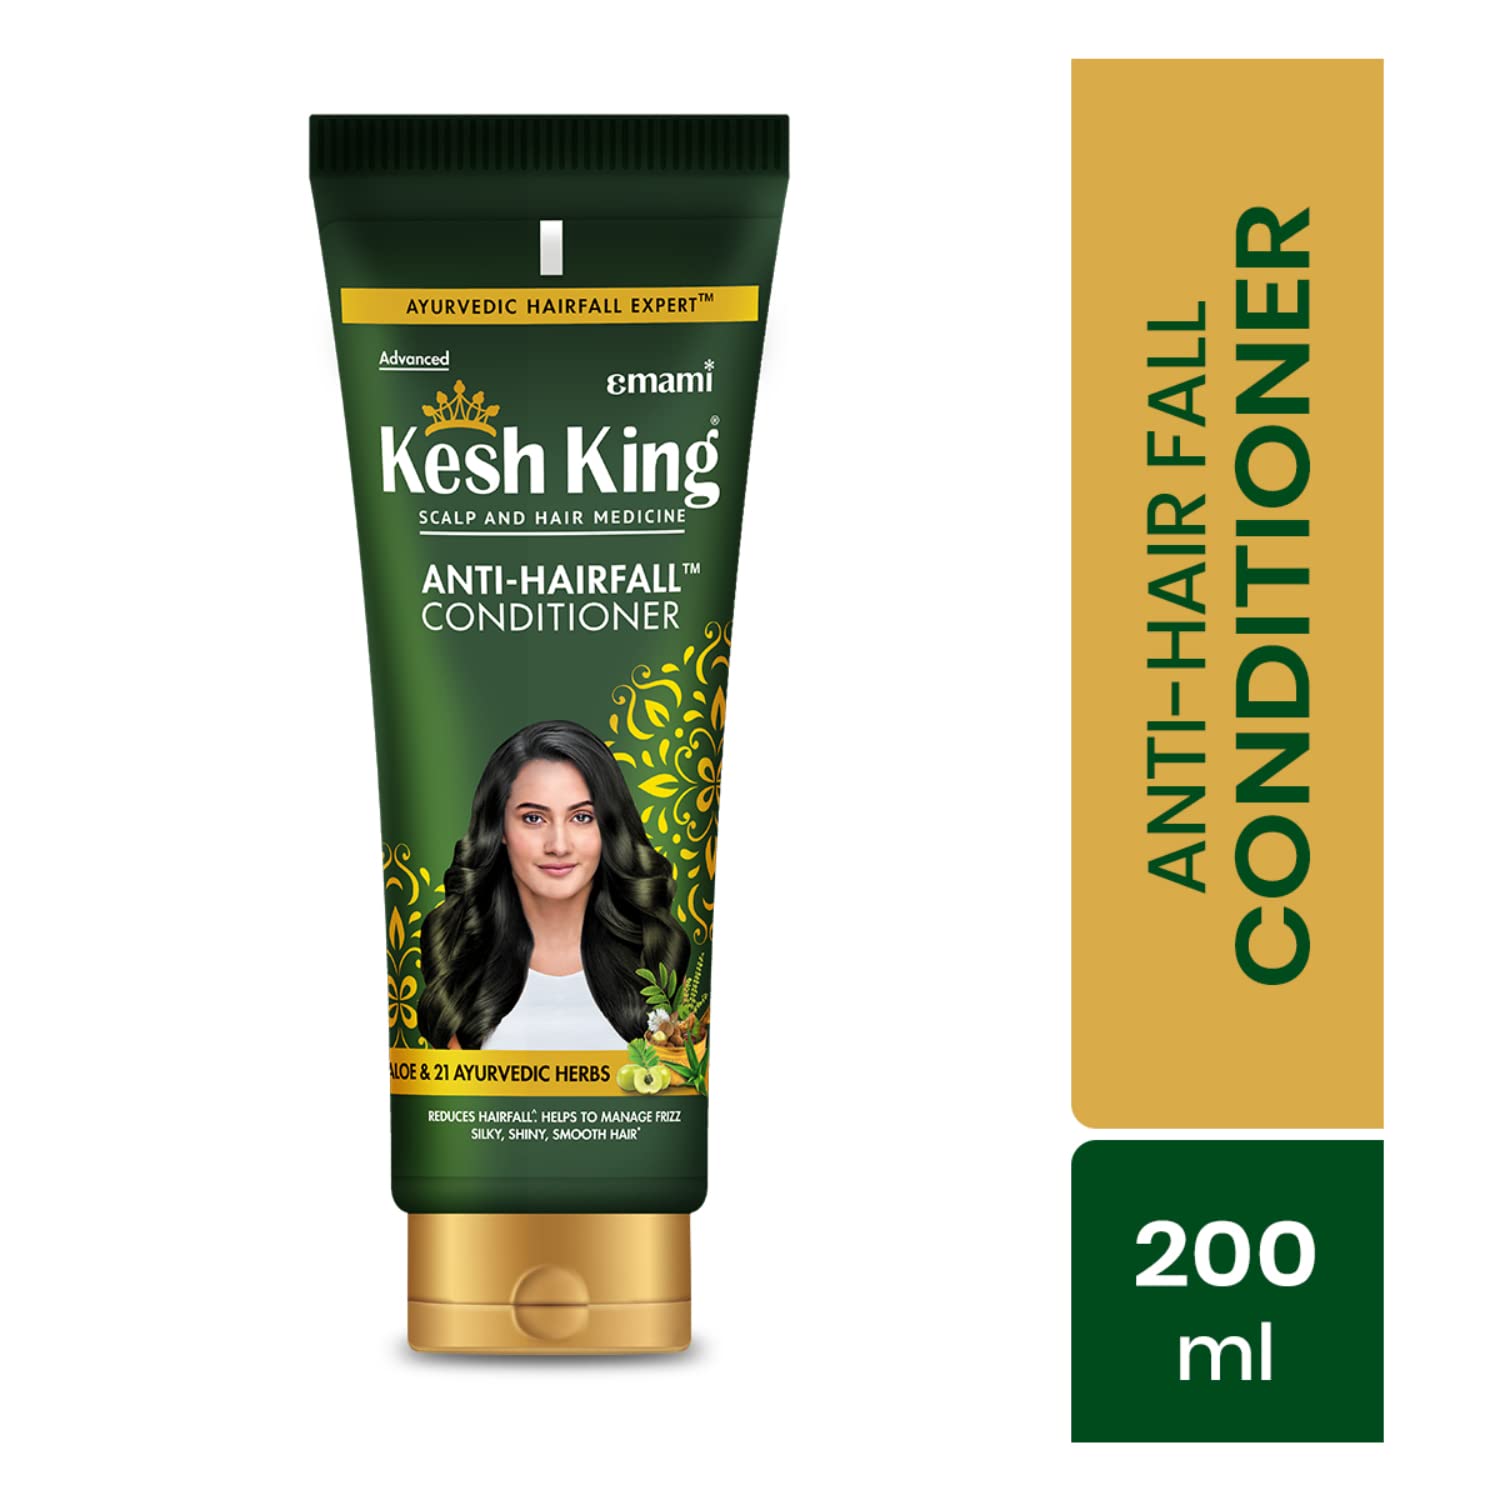 Emami Kesh King Anti-Hair Fall Conditioner